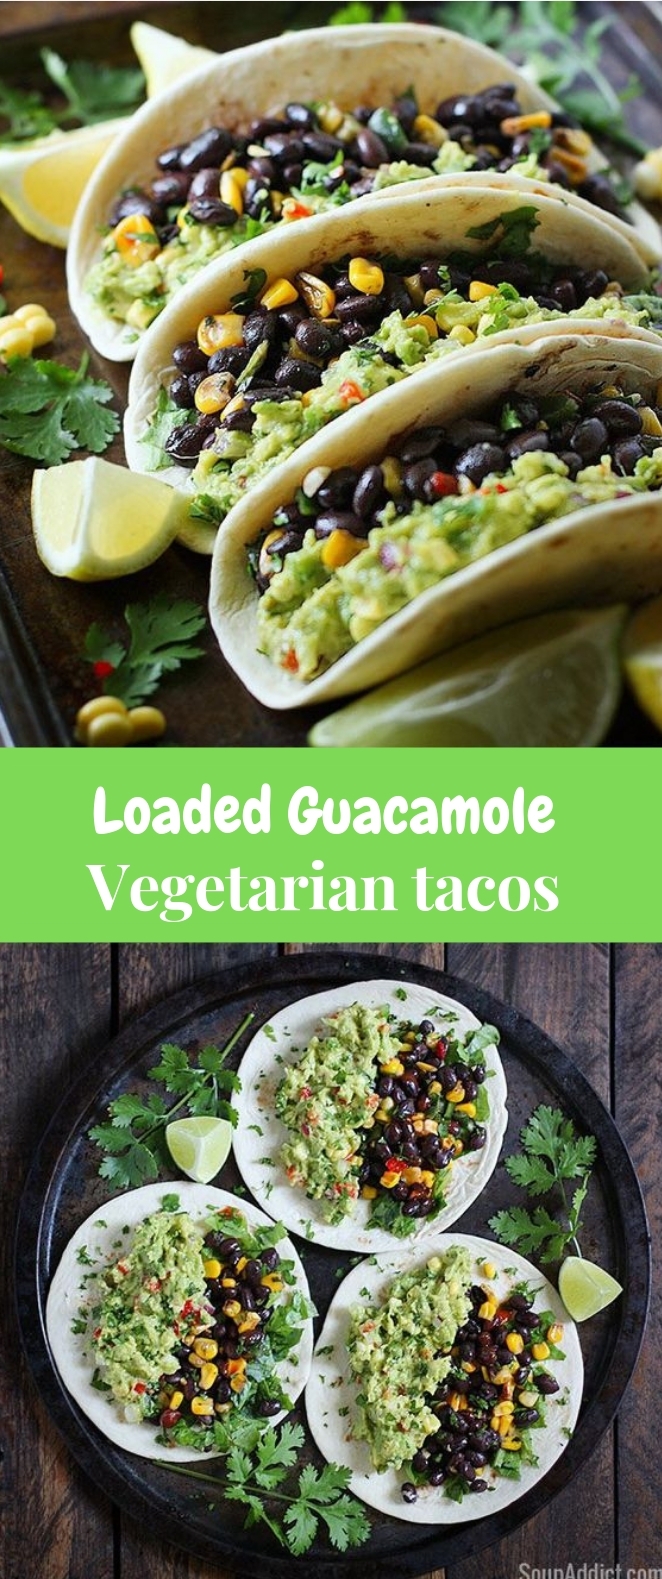 LOADED GUACAMOLE VEGETARIAN TACOS #vegetarian #tacos